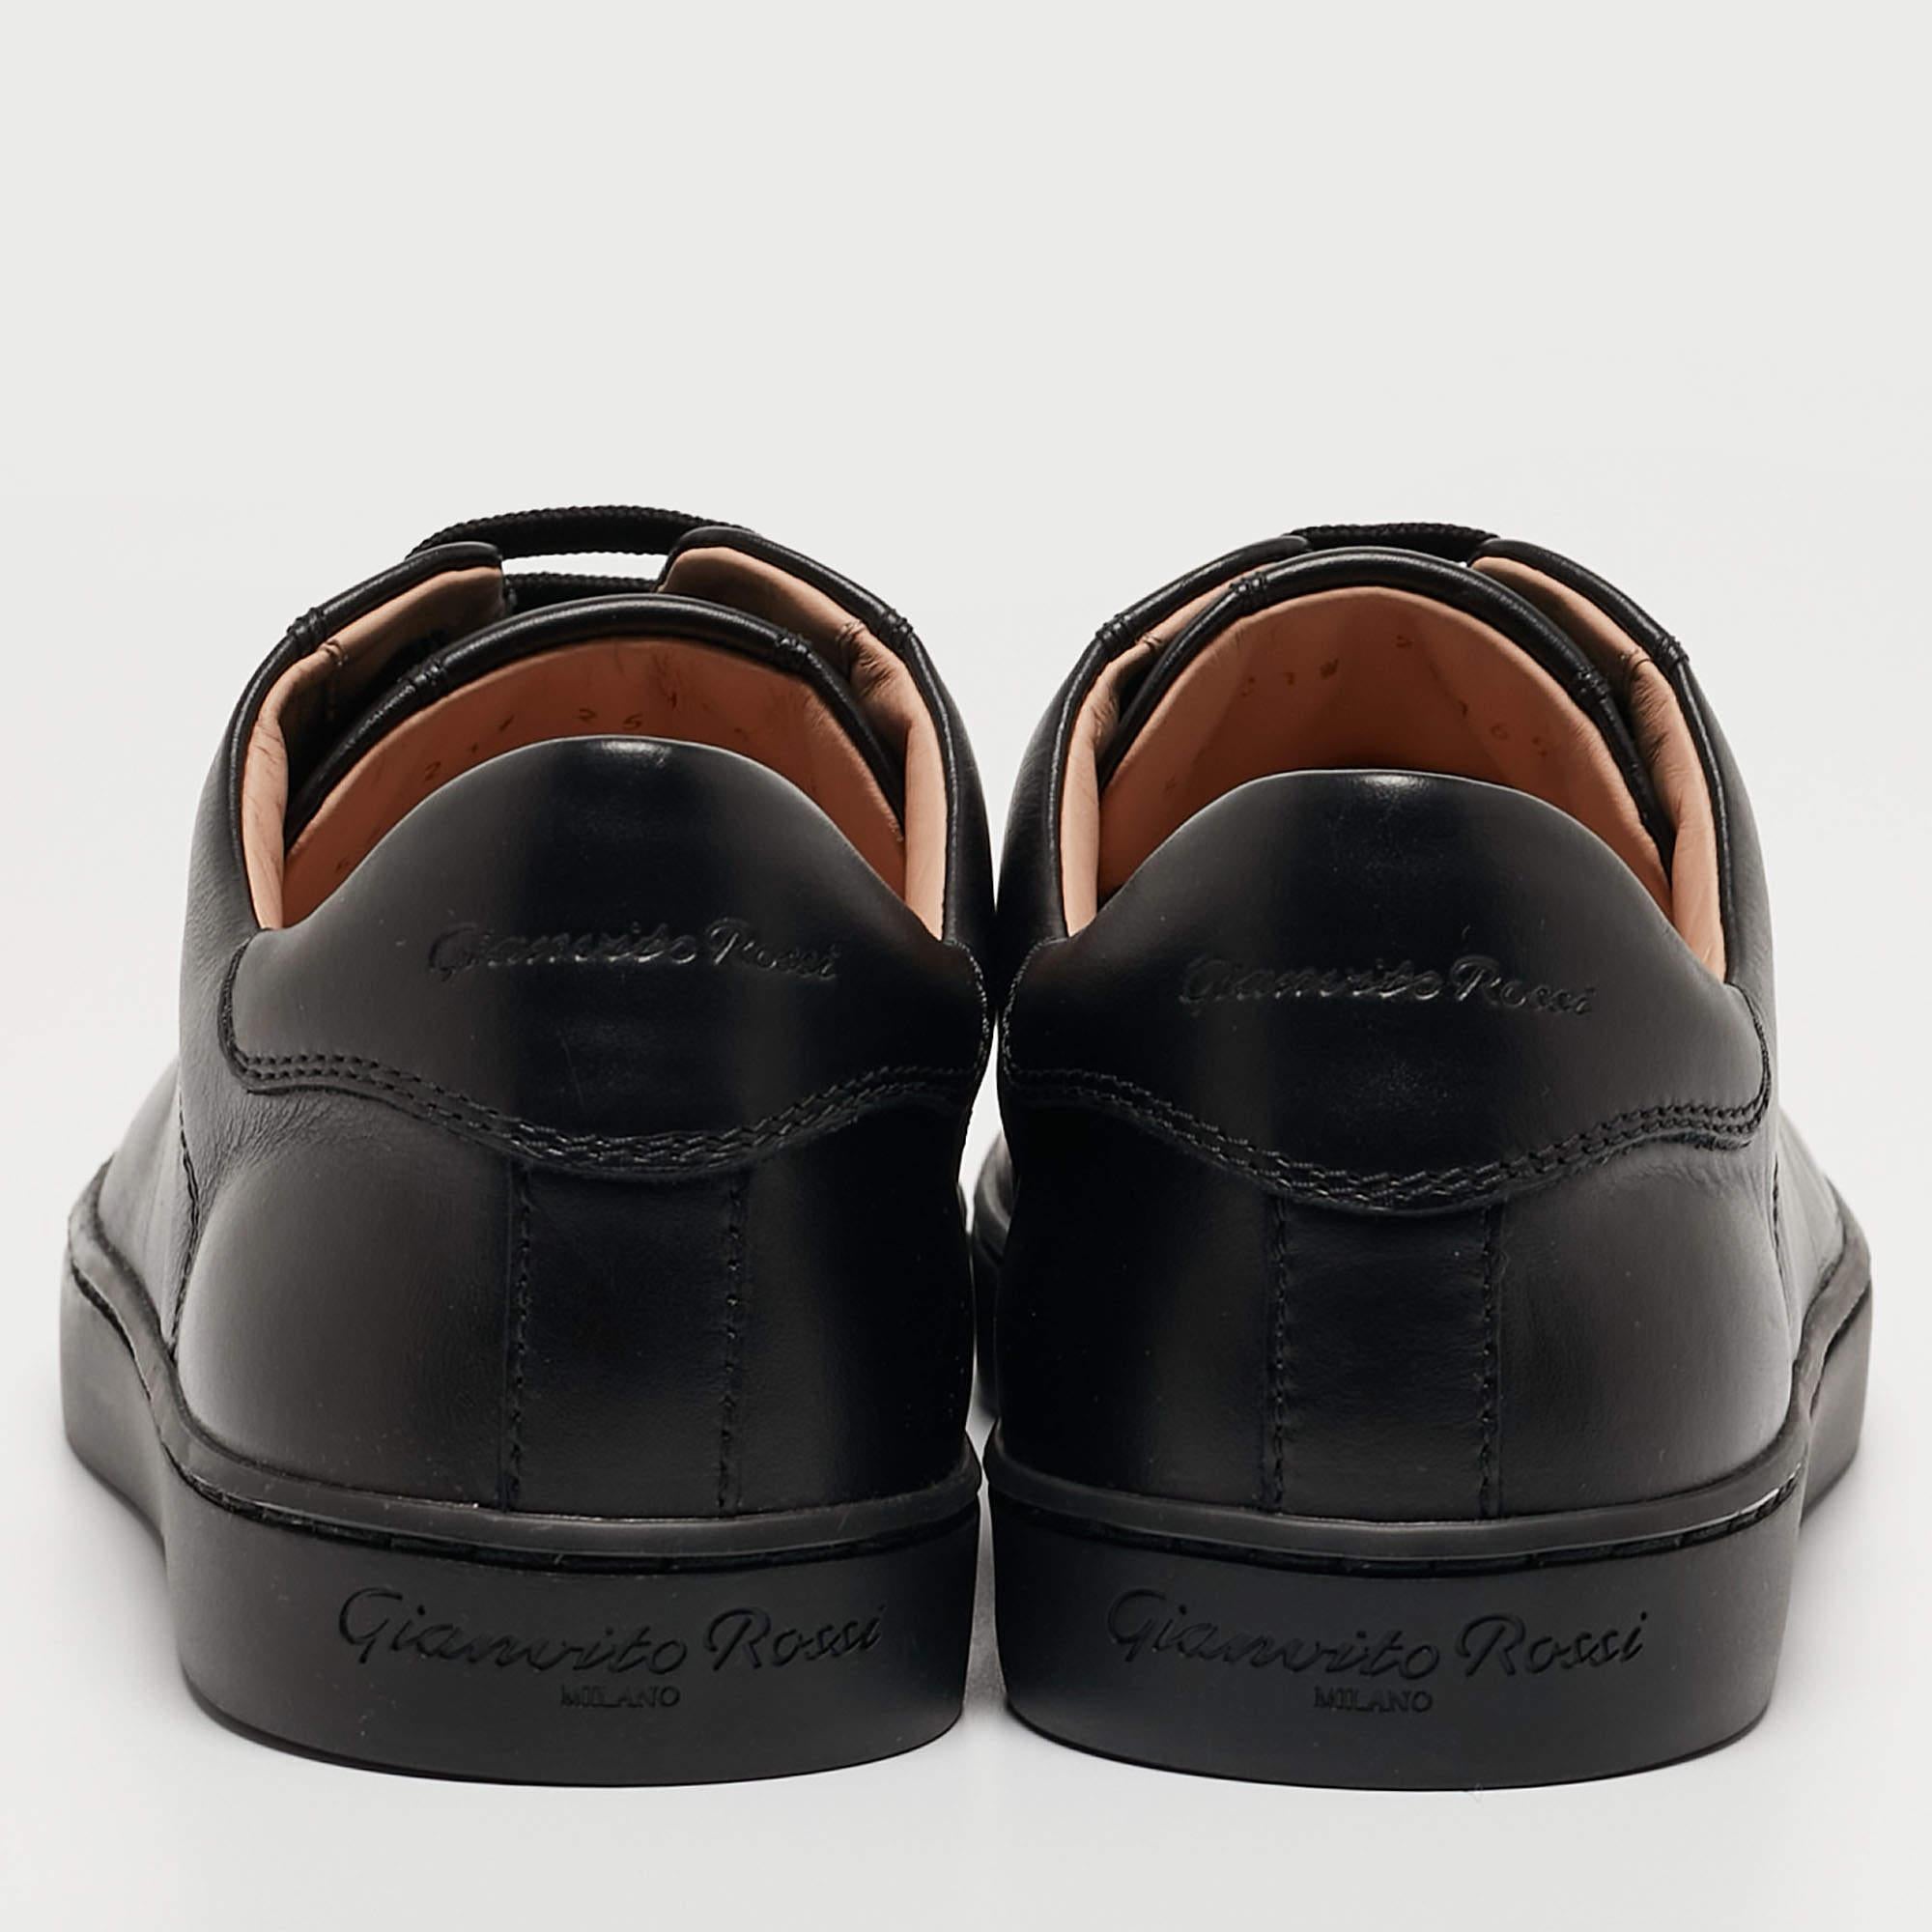 Gianvito Rossi Black Leather Low Top Sneakers Size 37.5 In Excellent Condition For Sale In Dubai, Al Qouz 2